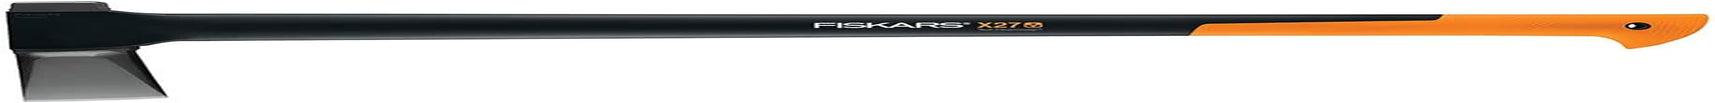 Fiskars, Fiskars 378841-1002 X27 Super Splitting Axe 36 Inch, 36-Inch, Black